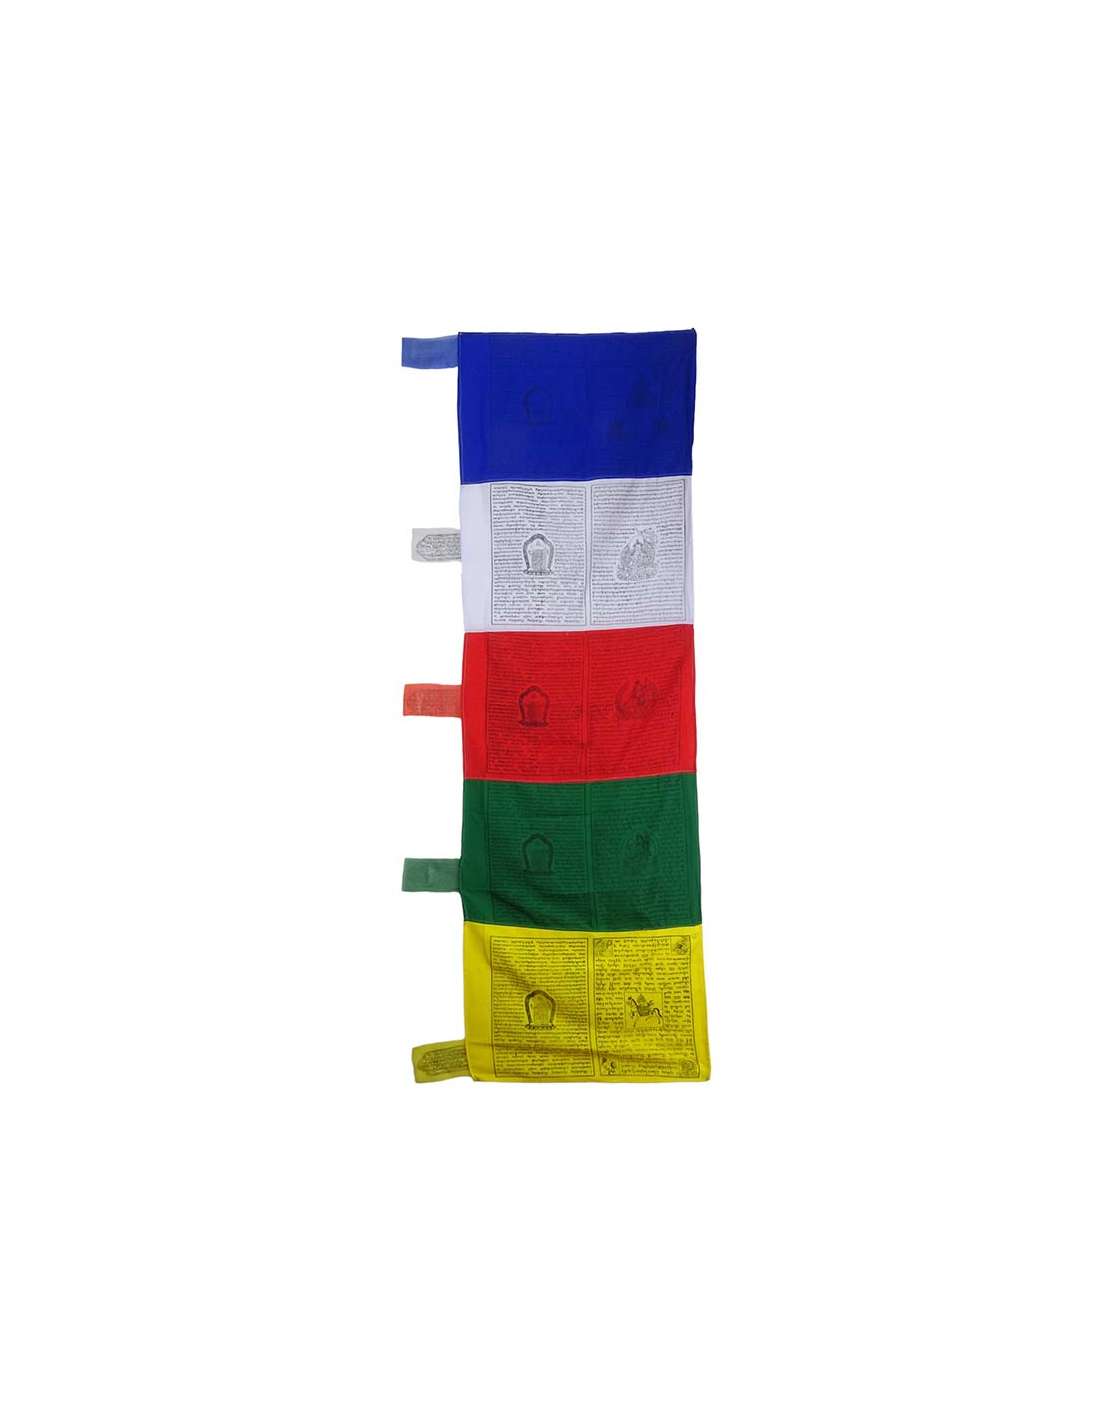 Banderas tibetanas budistas de oración colgando en bicicleta o coche  espiritual simbolizar mantras om ma ni 31.5 in ling string